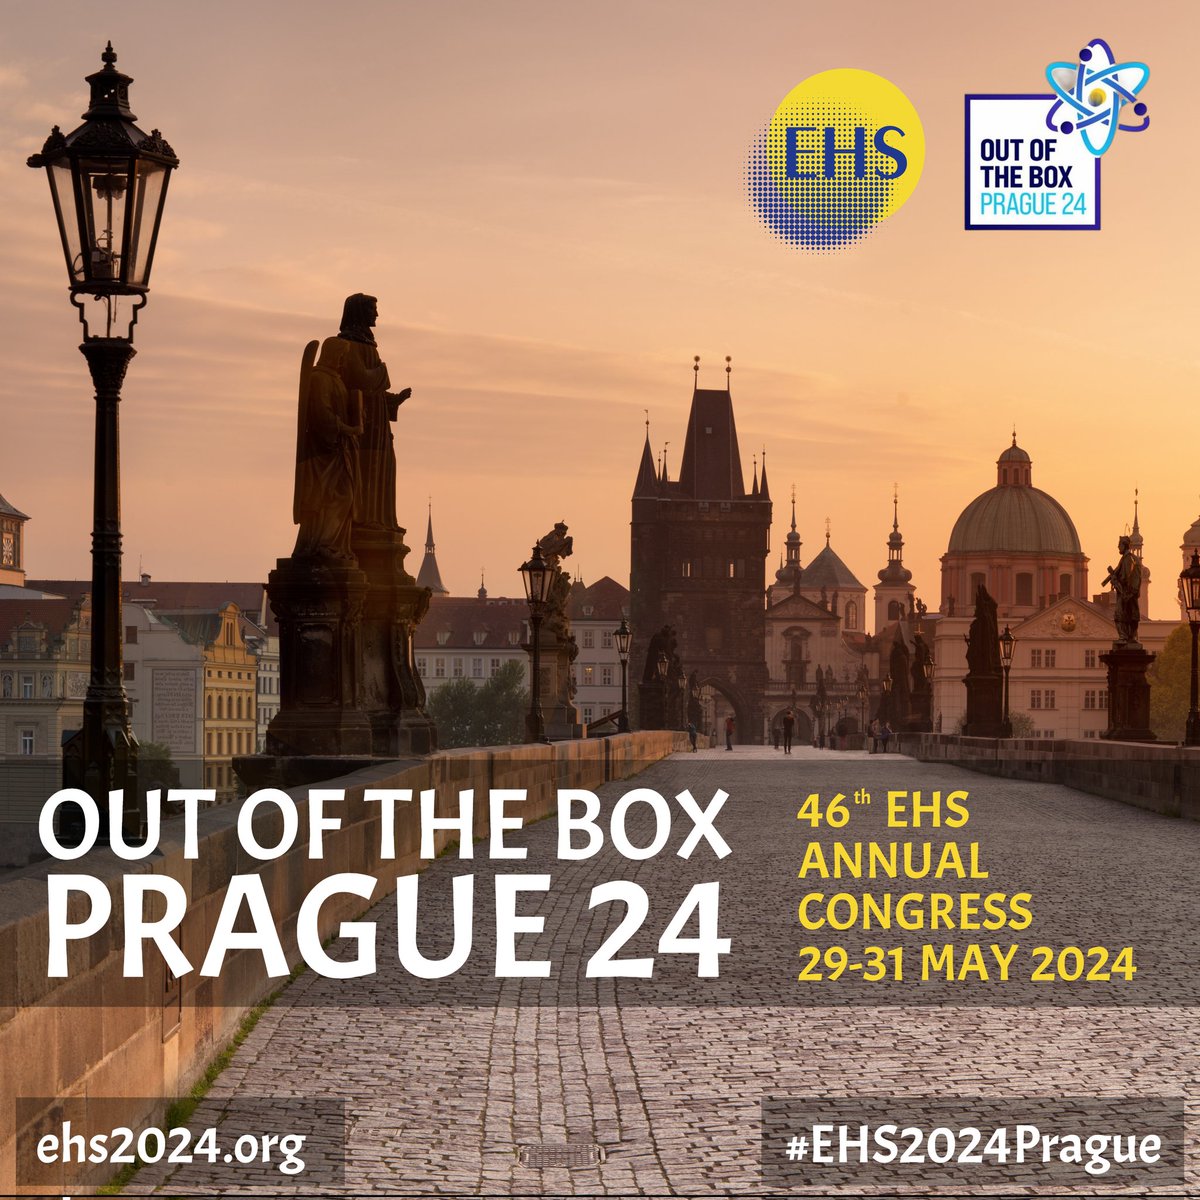 ✨ I'll speak at prestigious EHS Annual #HerniaCongress in Prague. Don't miss it!

#EHS2024Prague #HerniaSurgery #AWSurgery #HerniaFriends #HerniaFamily #IamEHS